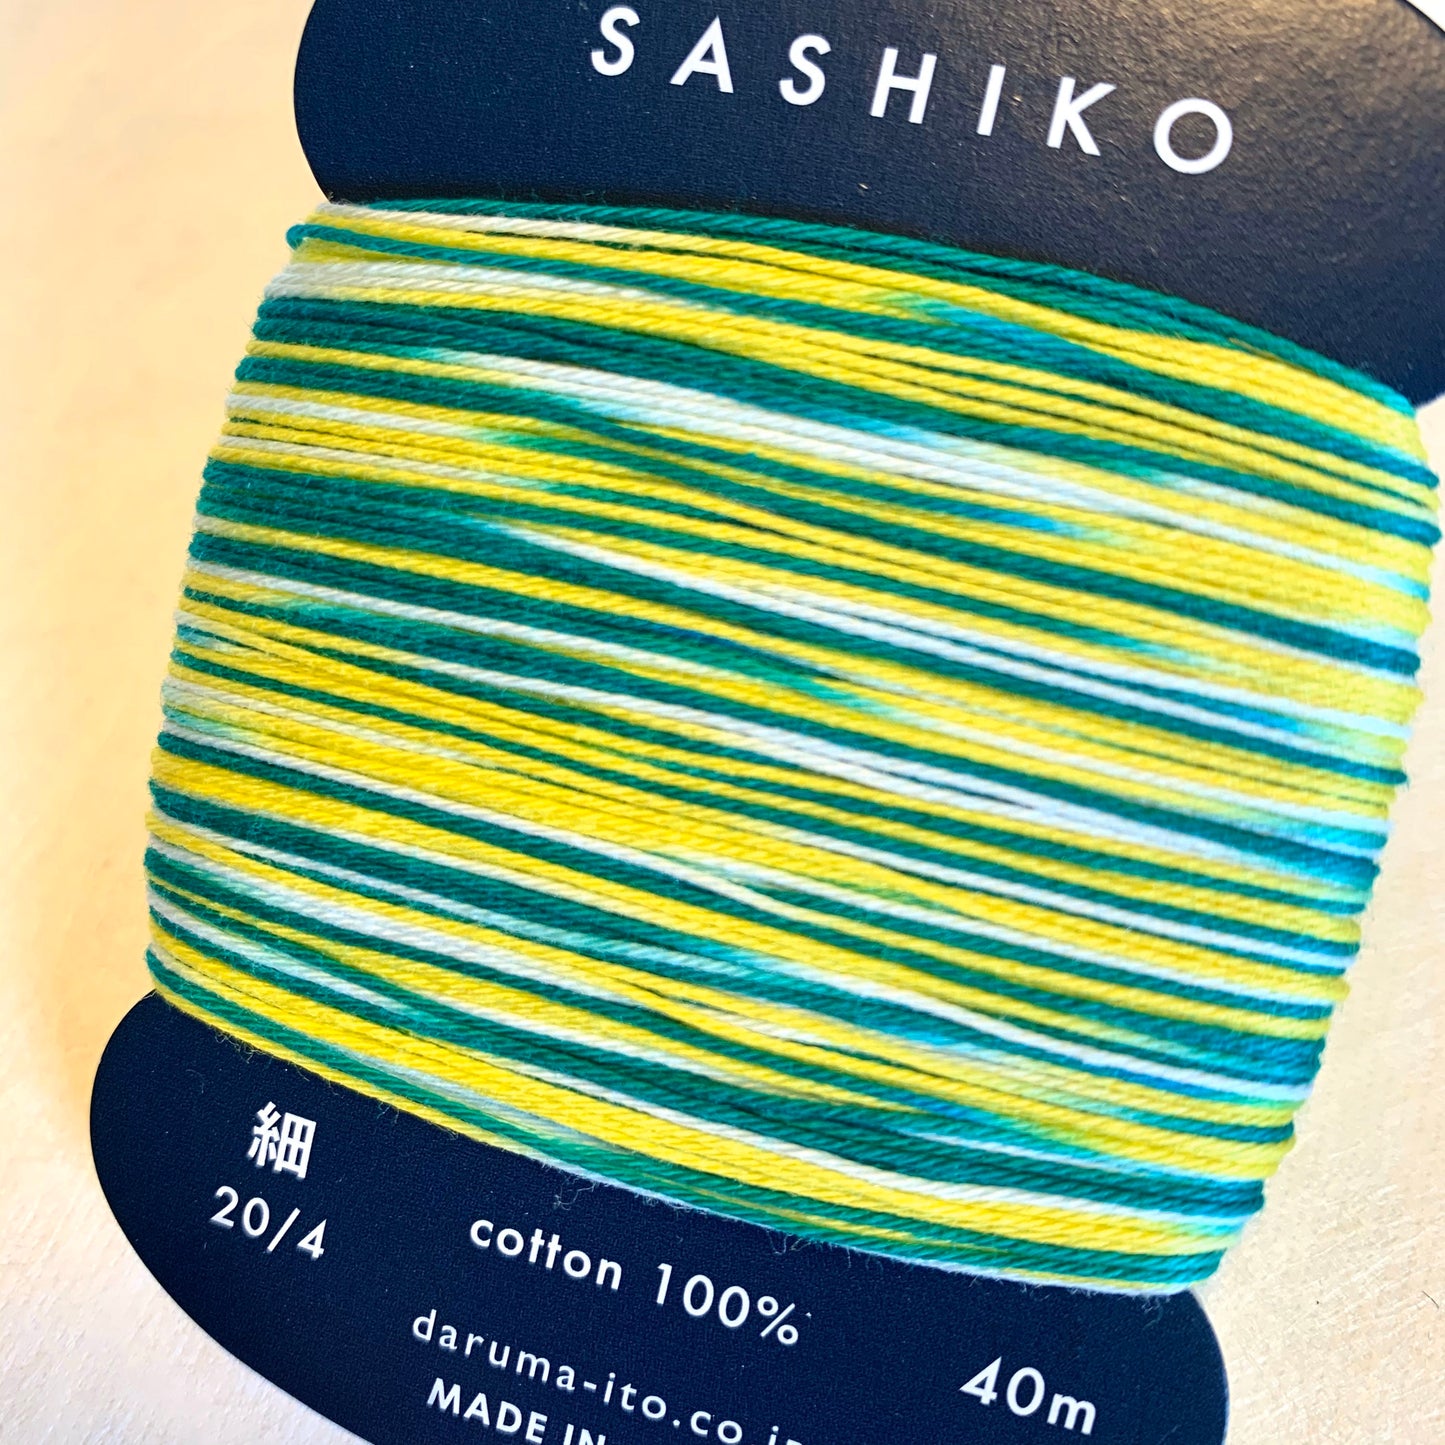 Daruma #402 "SHAVED ICE" variegated green white and yellow Japanese Cotton SASHIKO thread 40 meter card 20/4